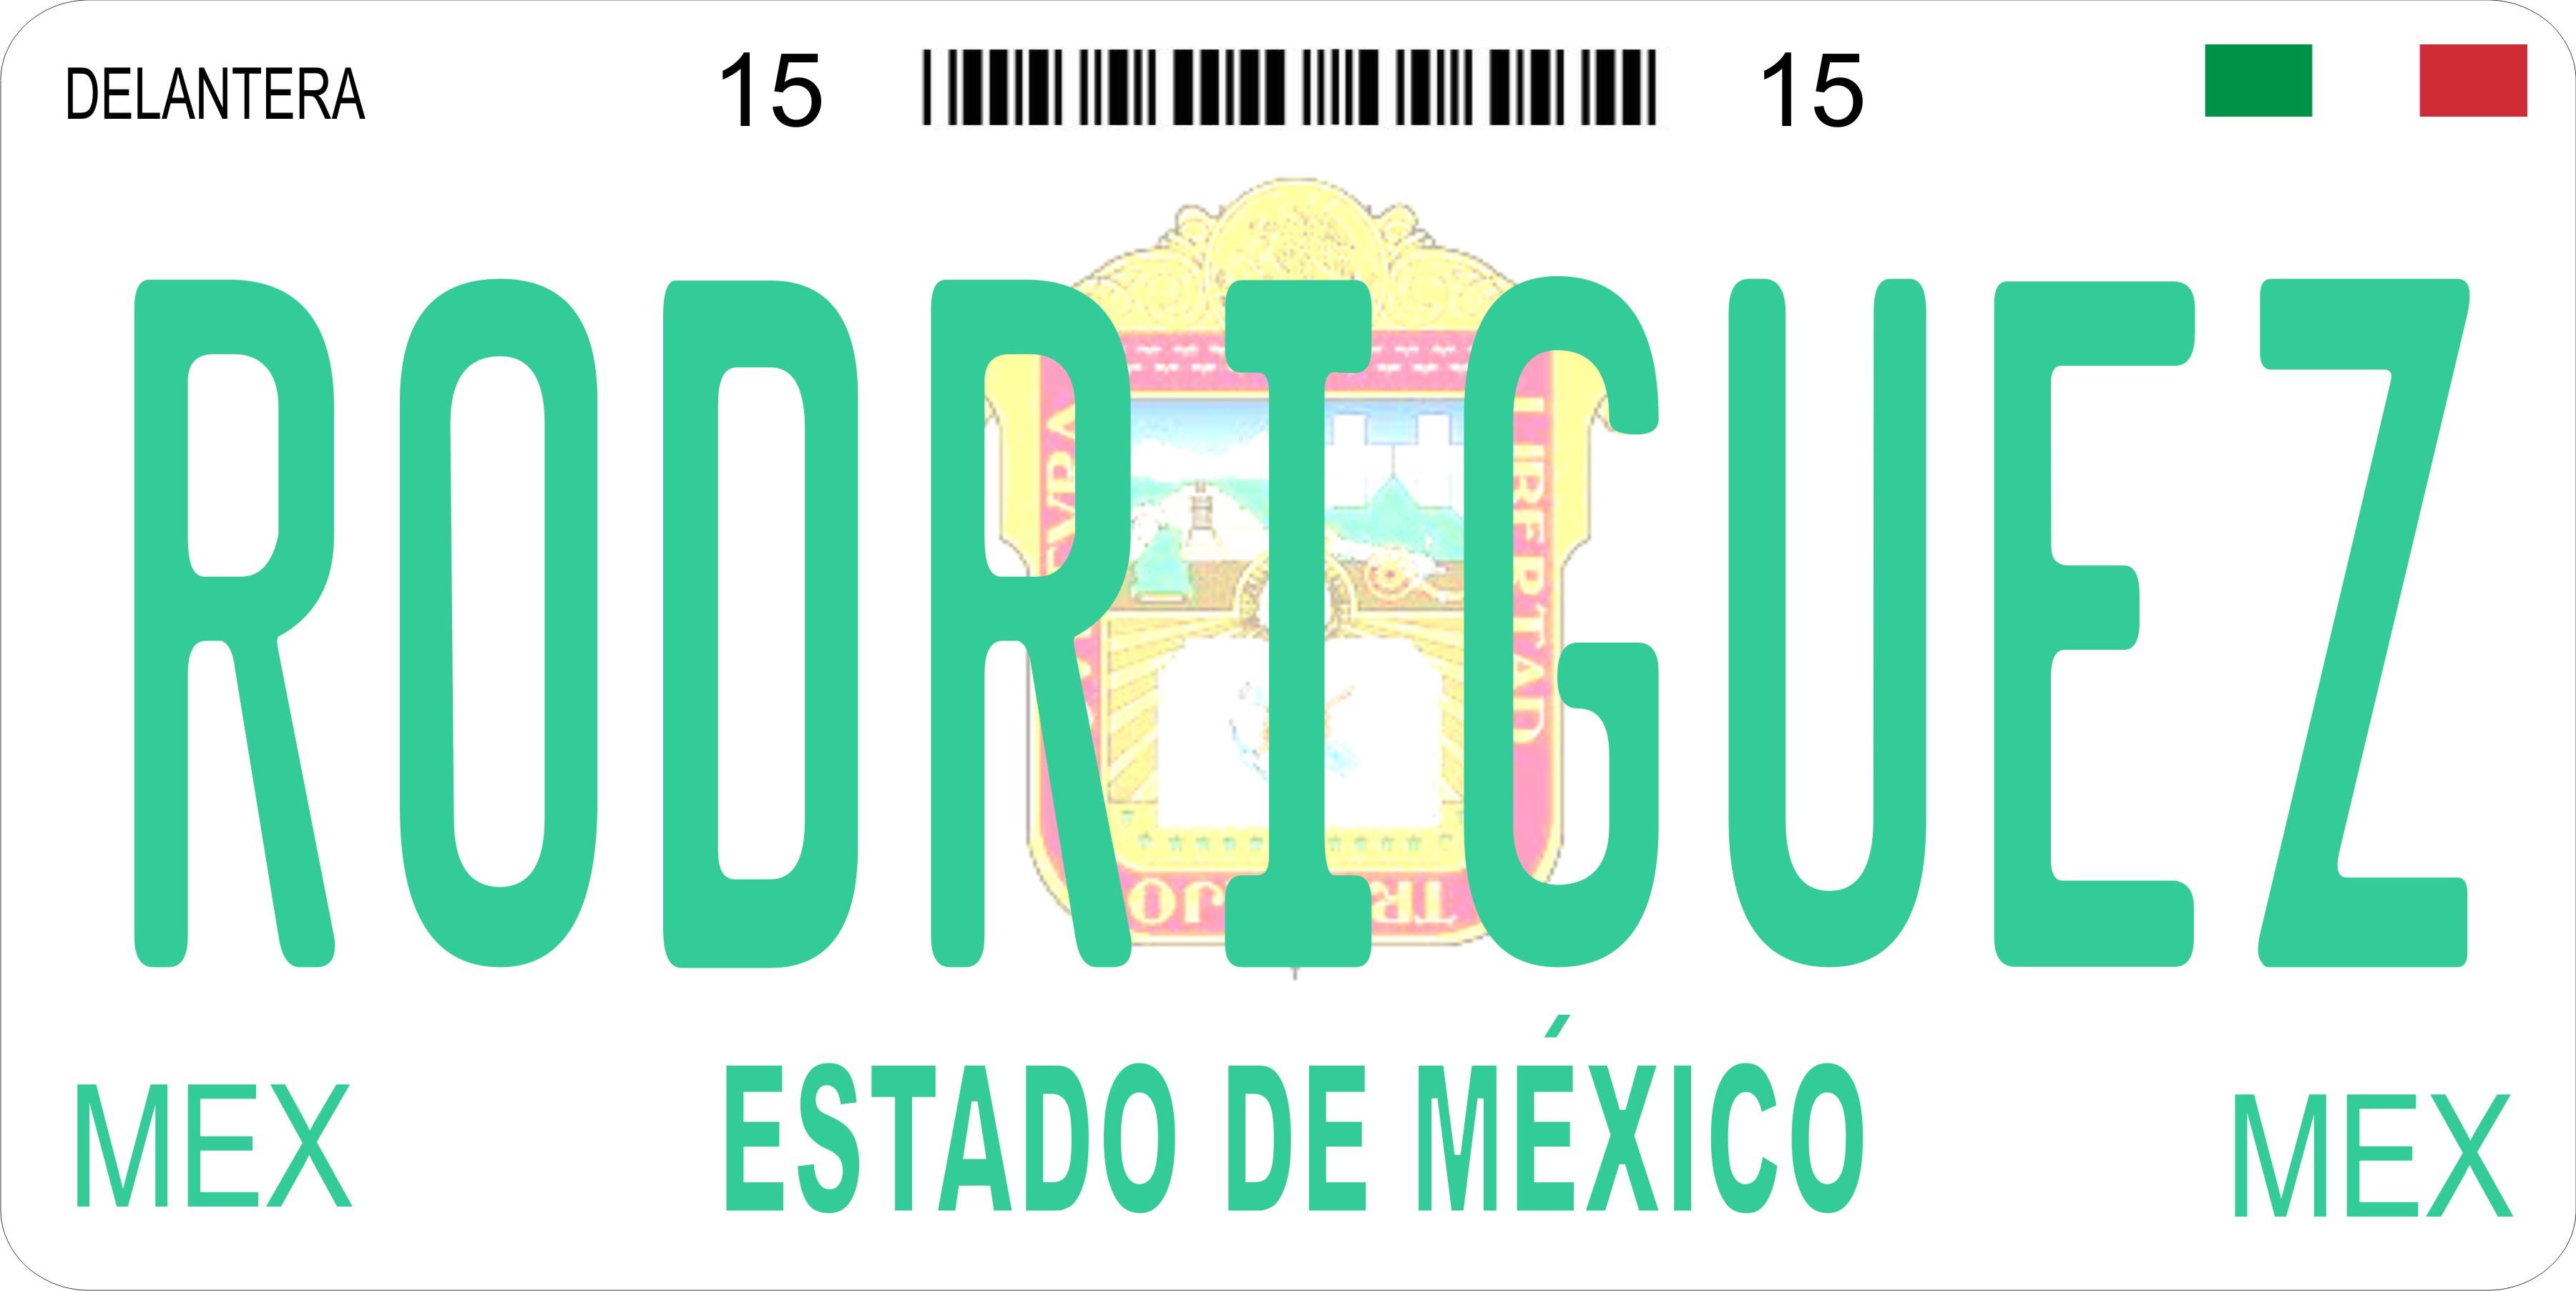 Mexico Estado De Mexico Photo License Plate Free Personalization on this plate